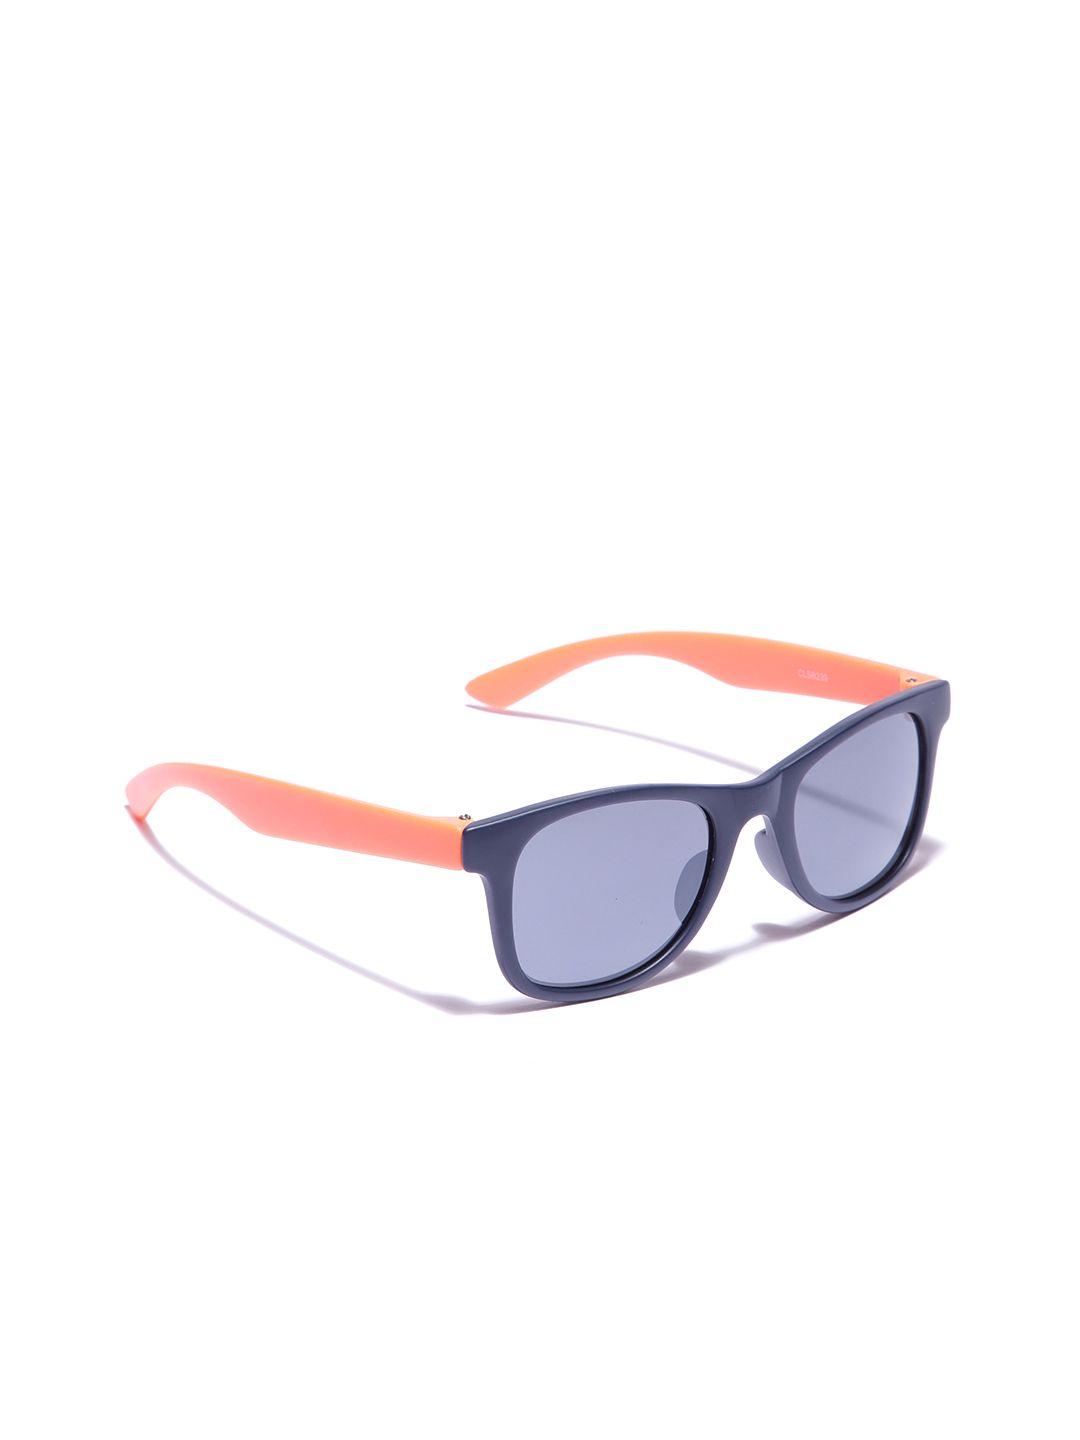 carlton london boys grey lens & blue wayfarer sunglasses with uv protected lens clsb243